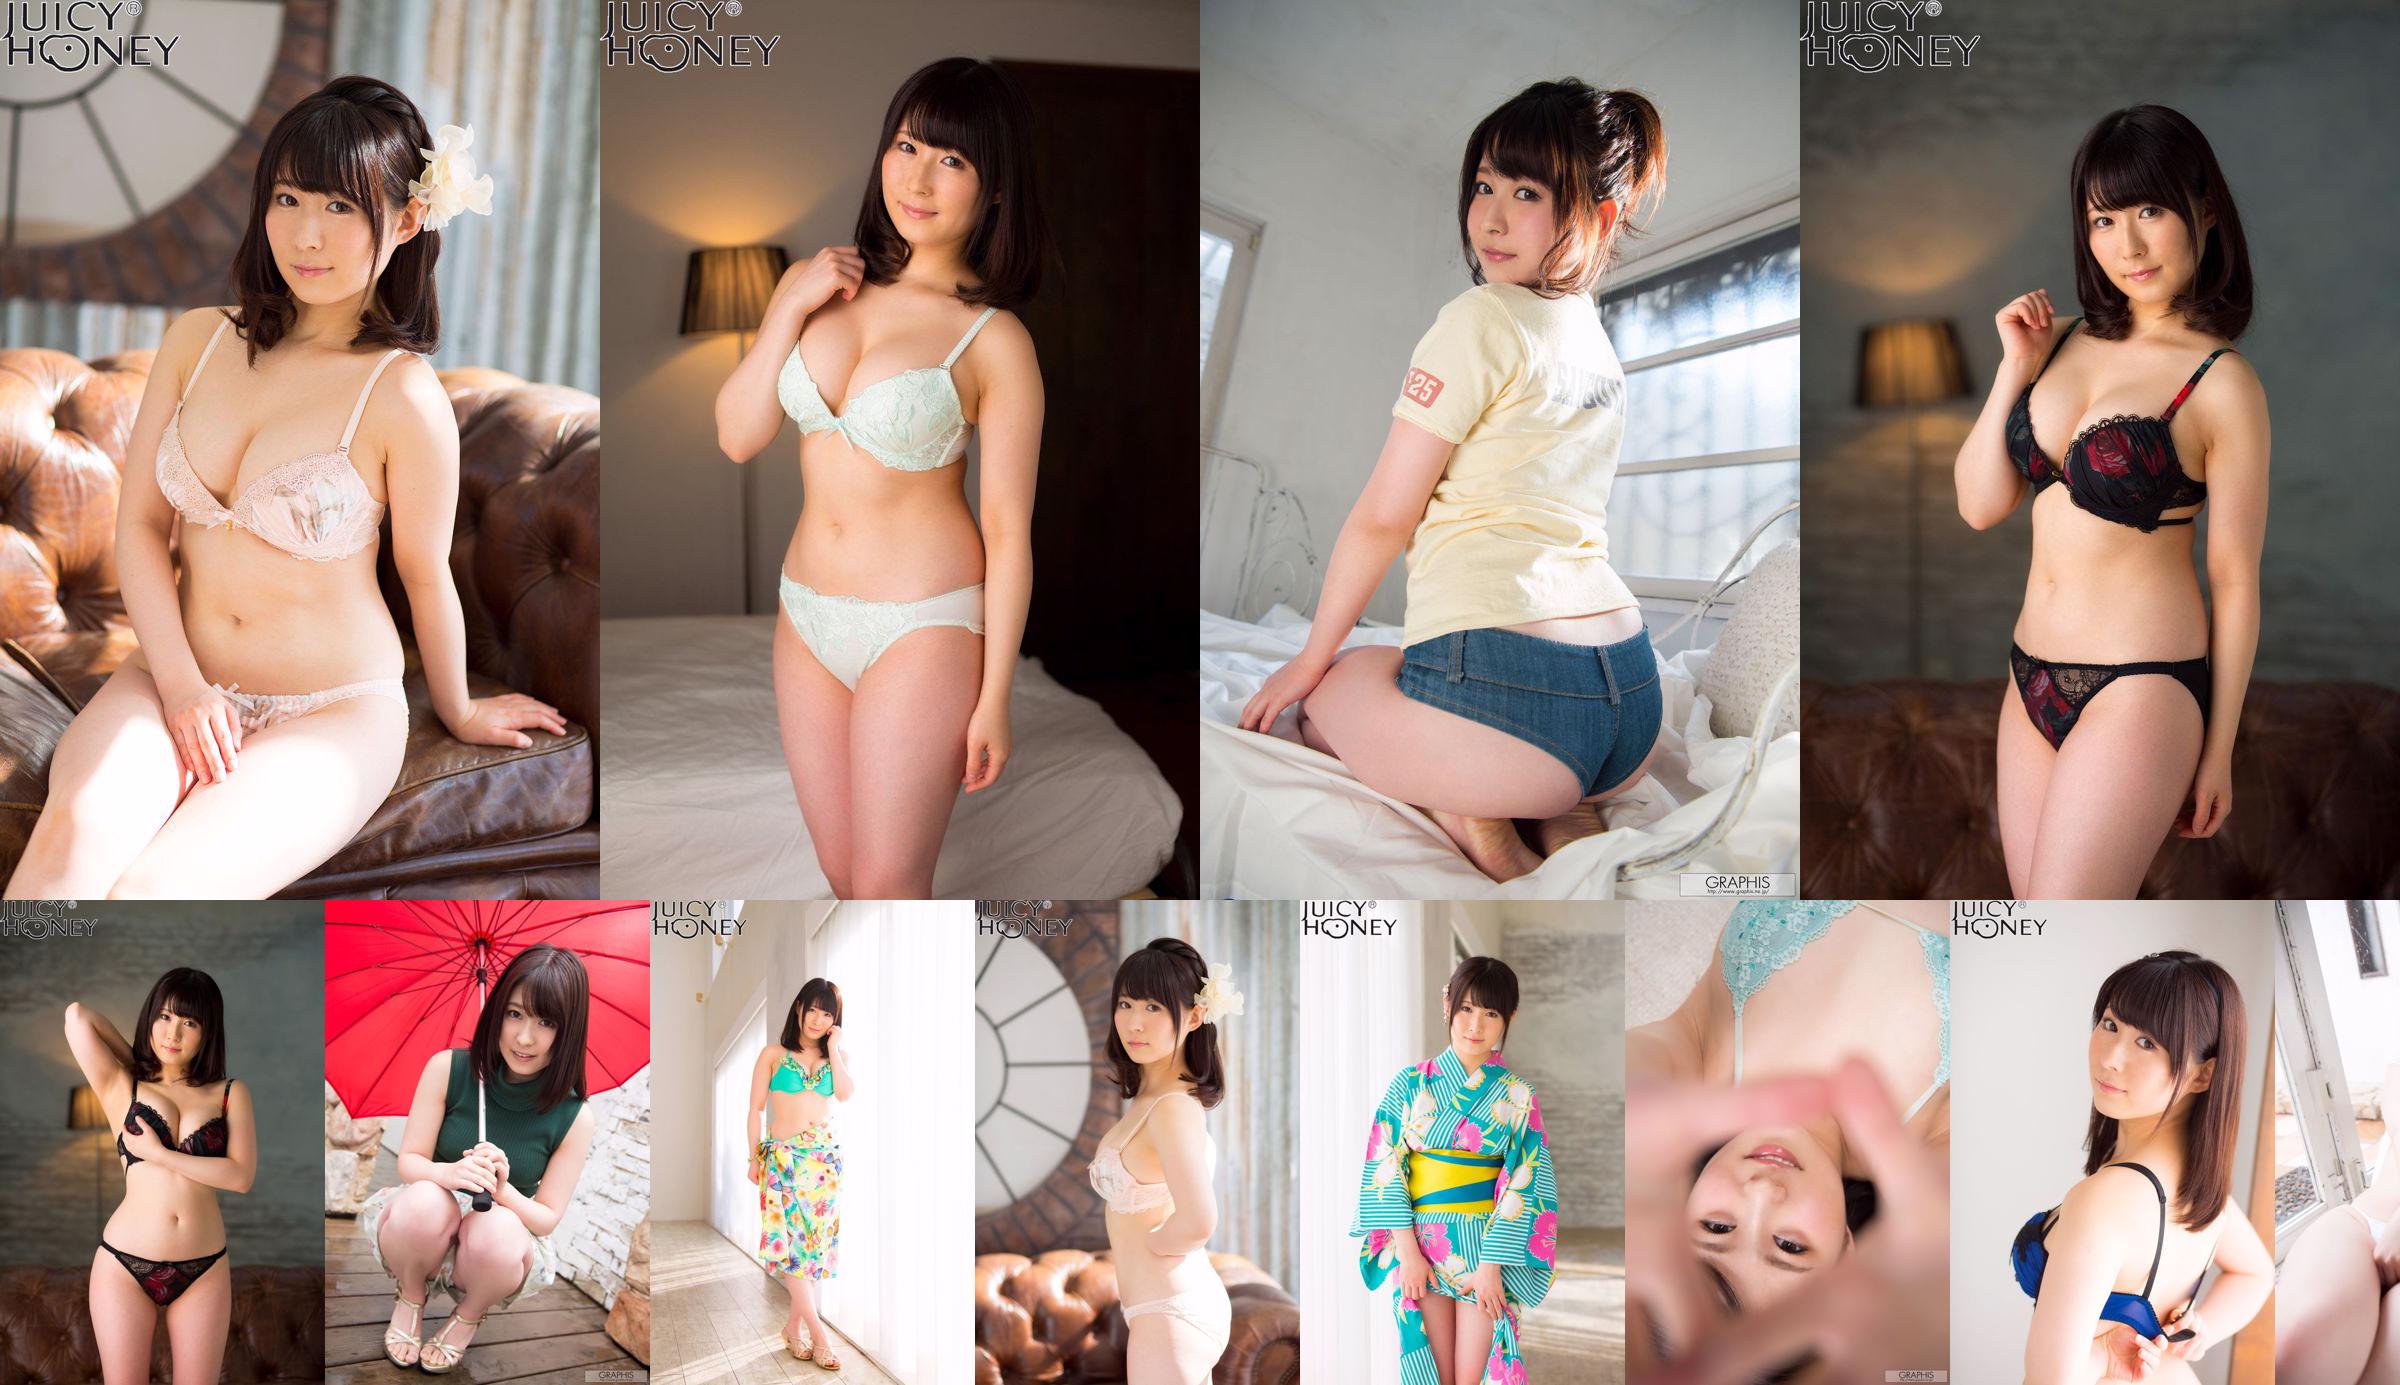 [X-City] Juicy Honey jh216 Asuka 리응 Rin Asuka No.6e98d4 페이지 1